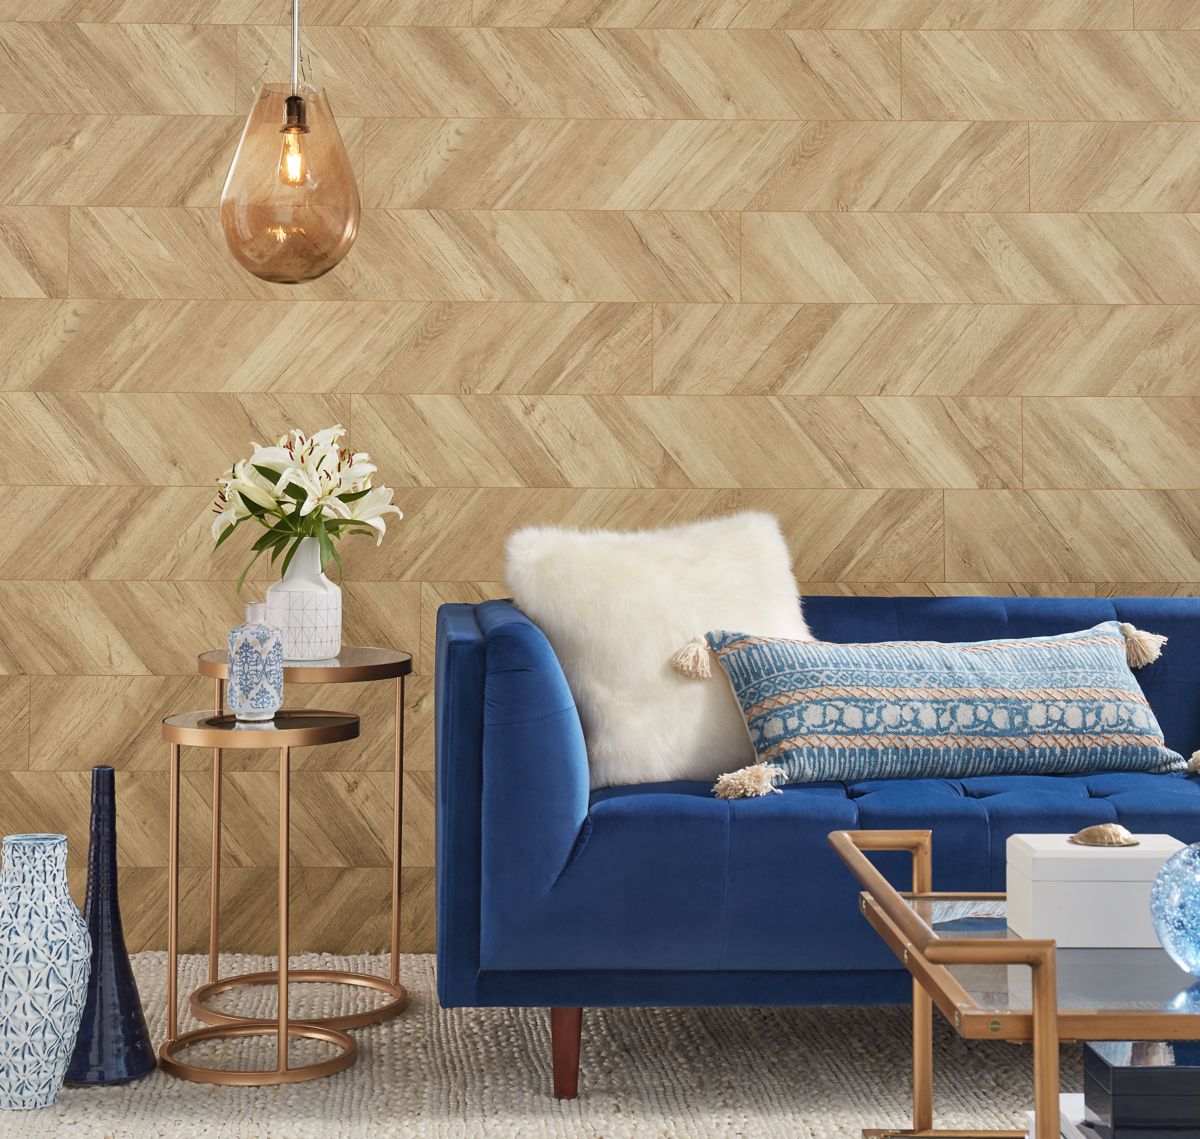 Herringbone pattern wood accent wall in living room